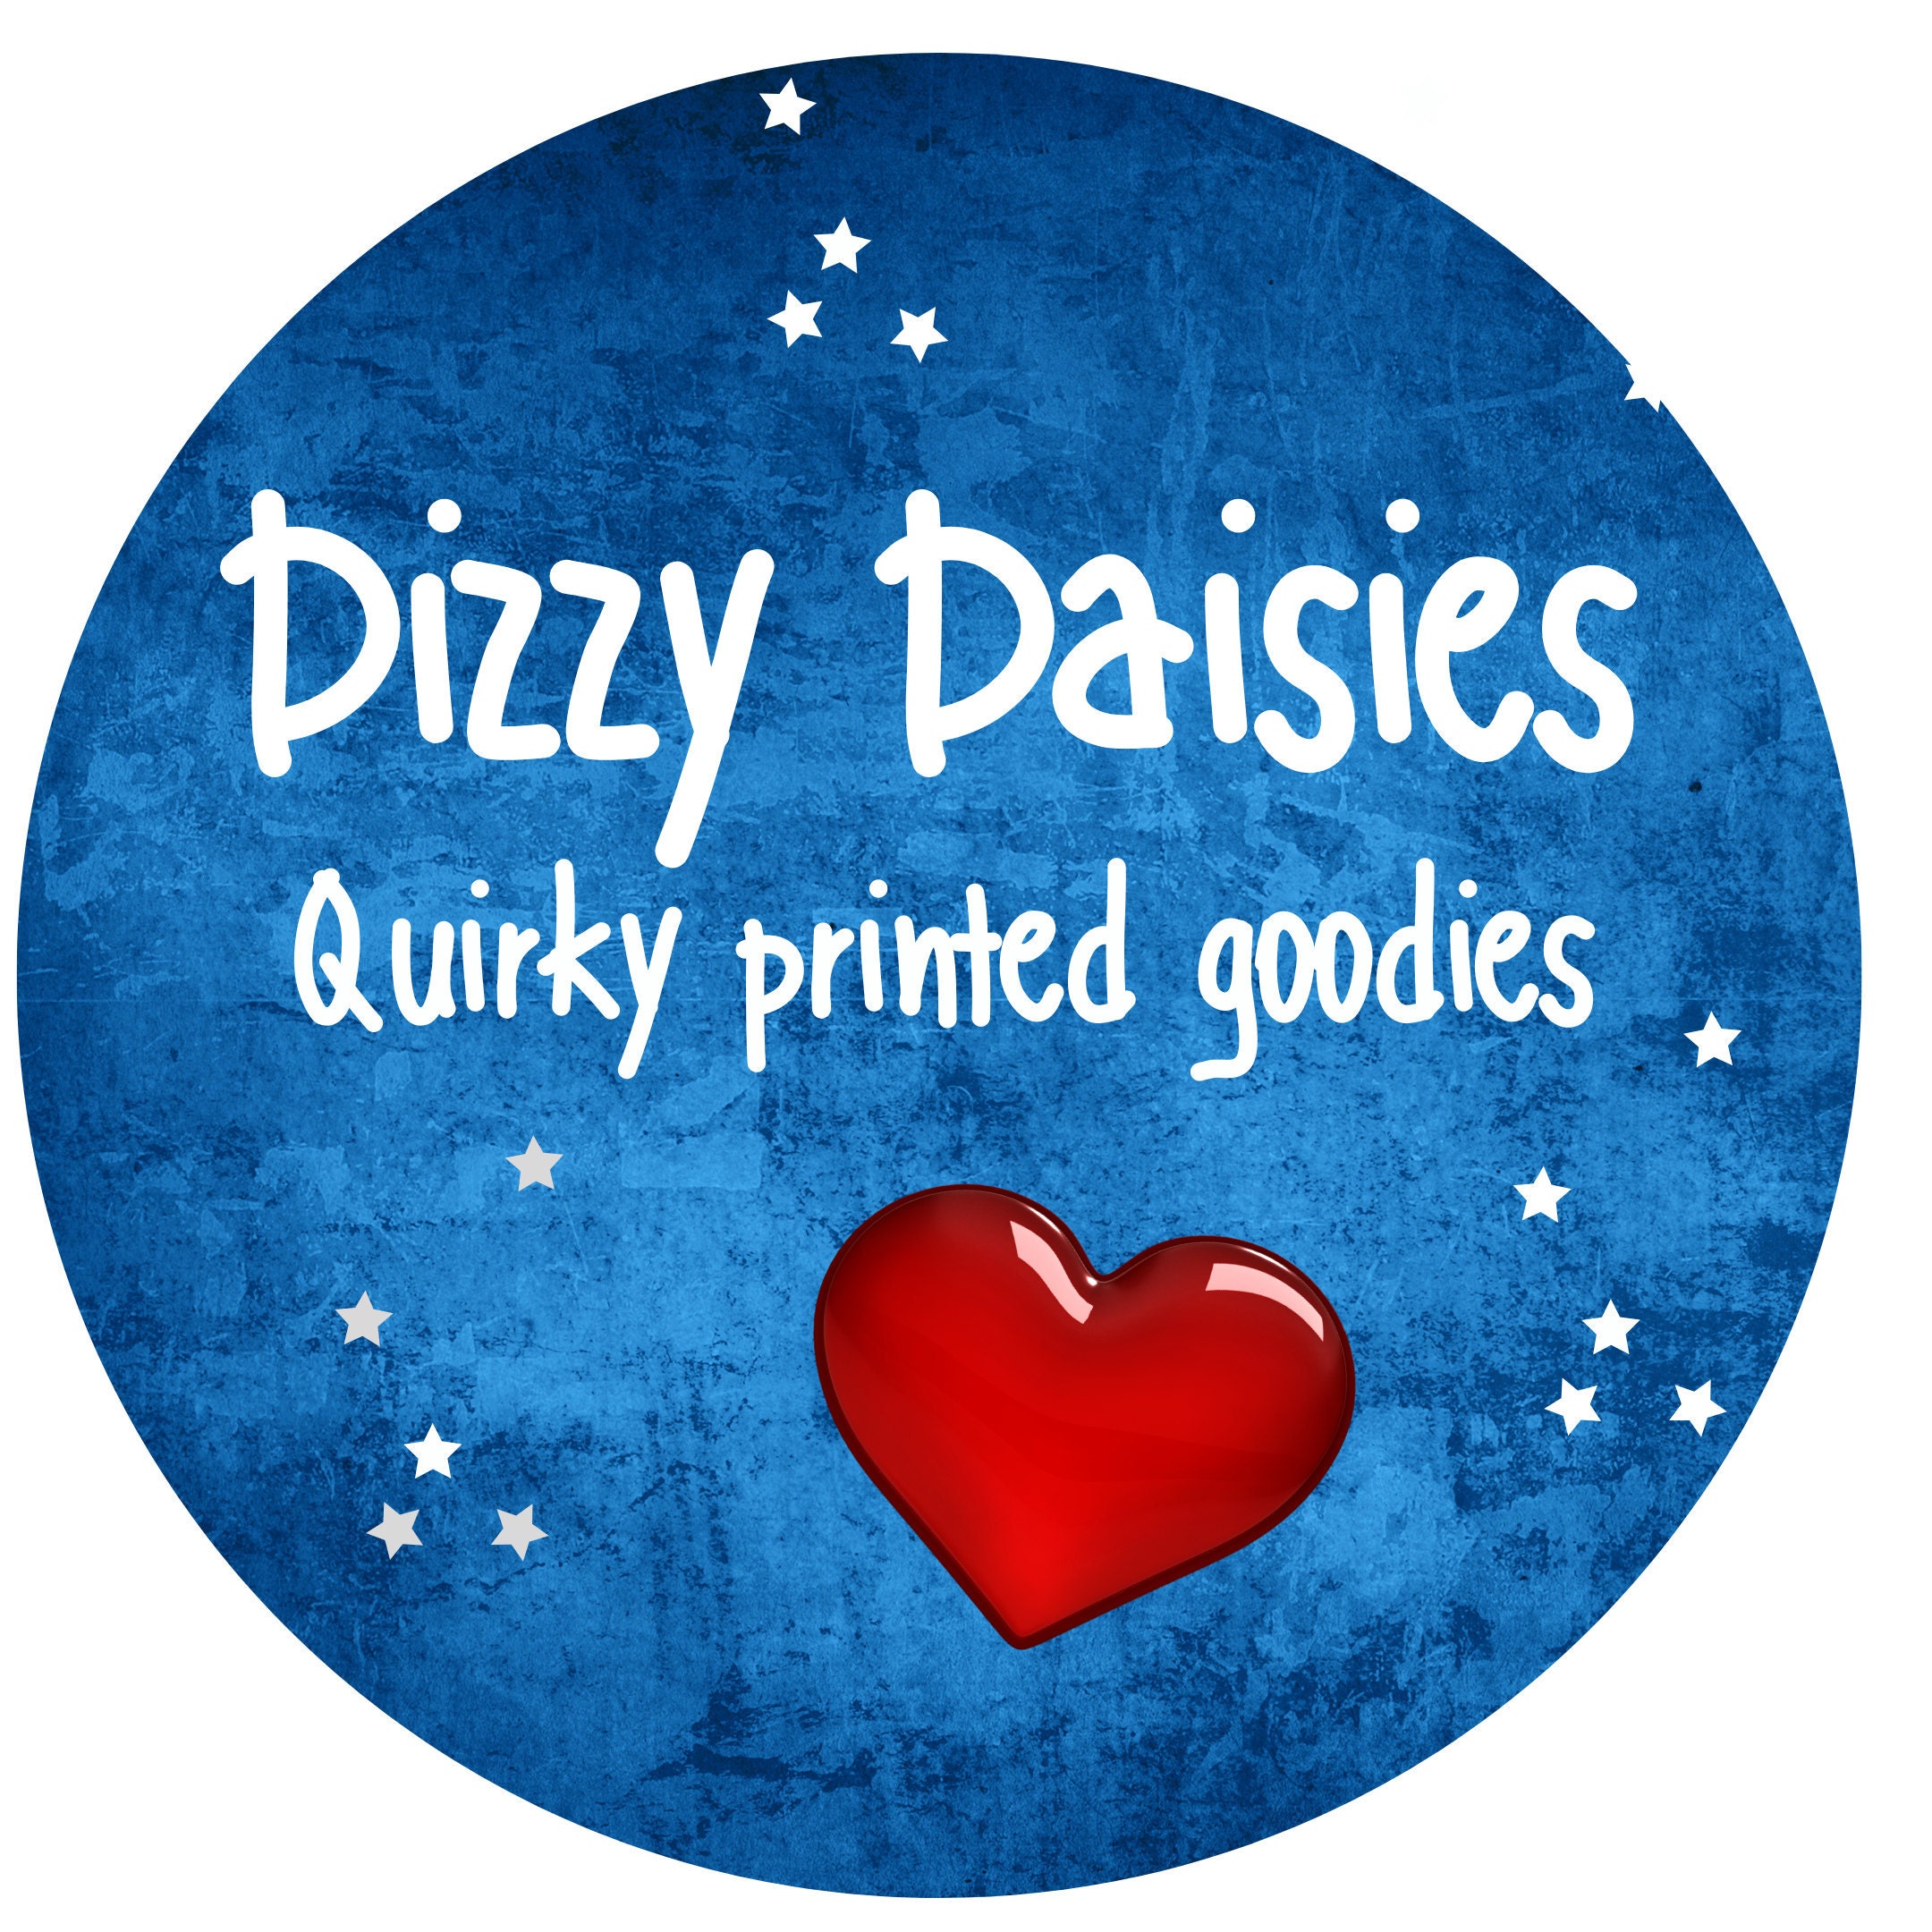 Personalised Ski Straps - Custom Printed by Dizzy Daisies